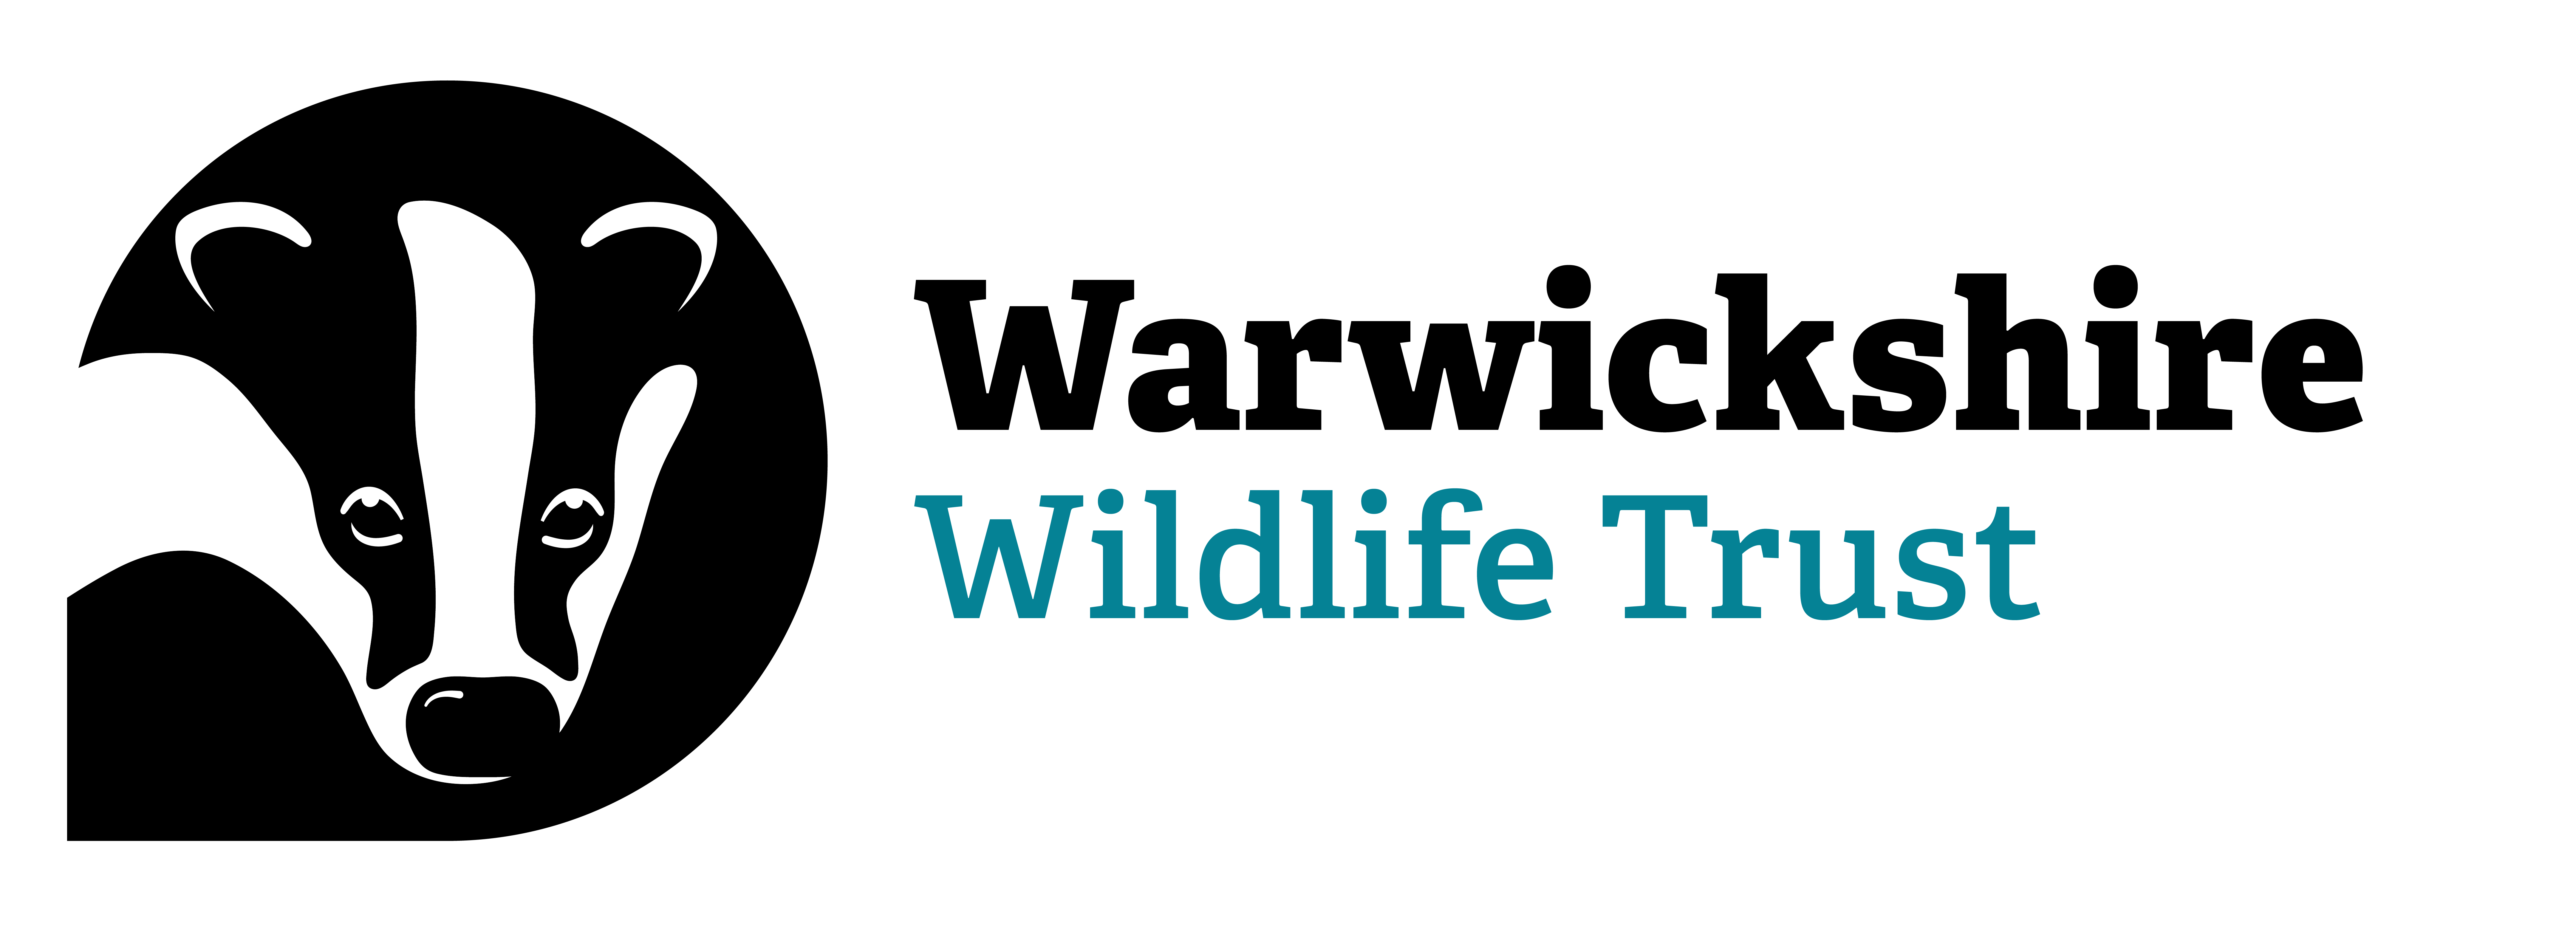 Warwickshire Wildlife Trust's logo